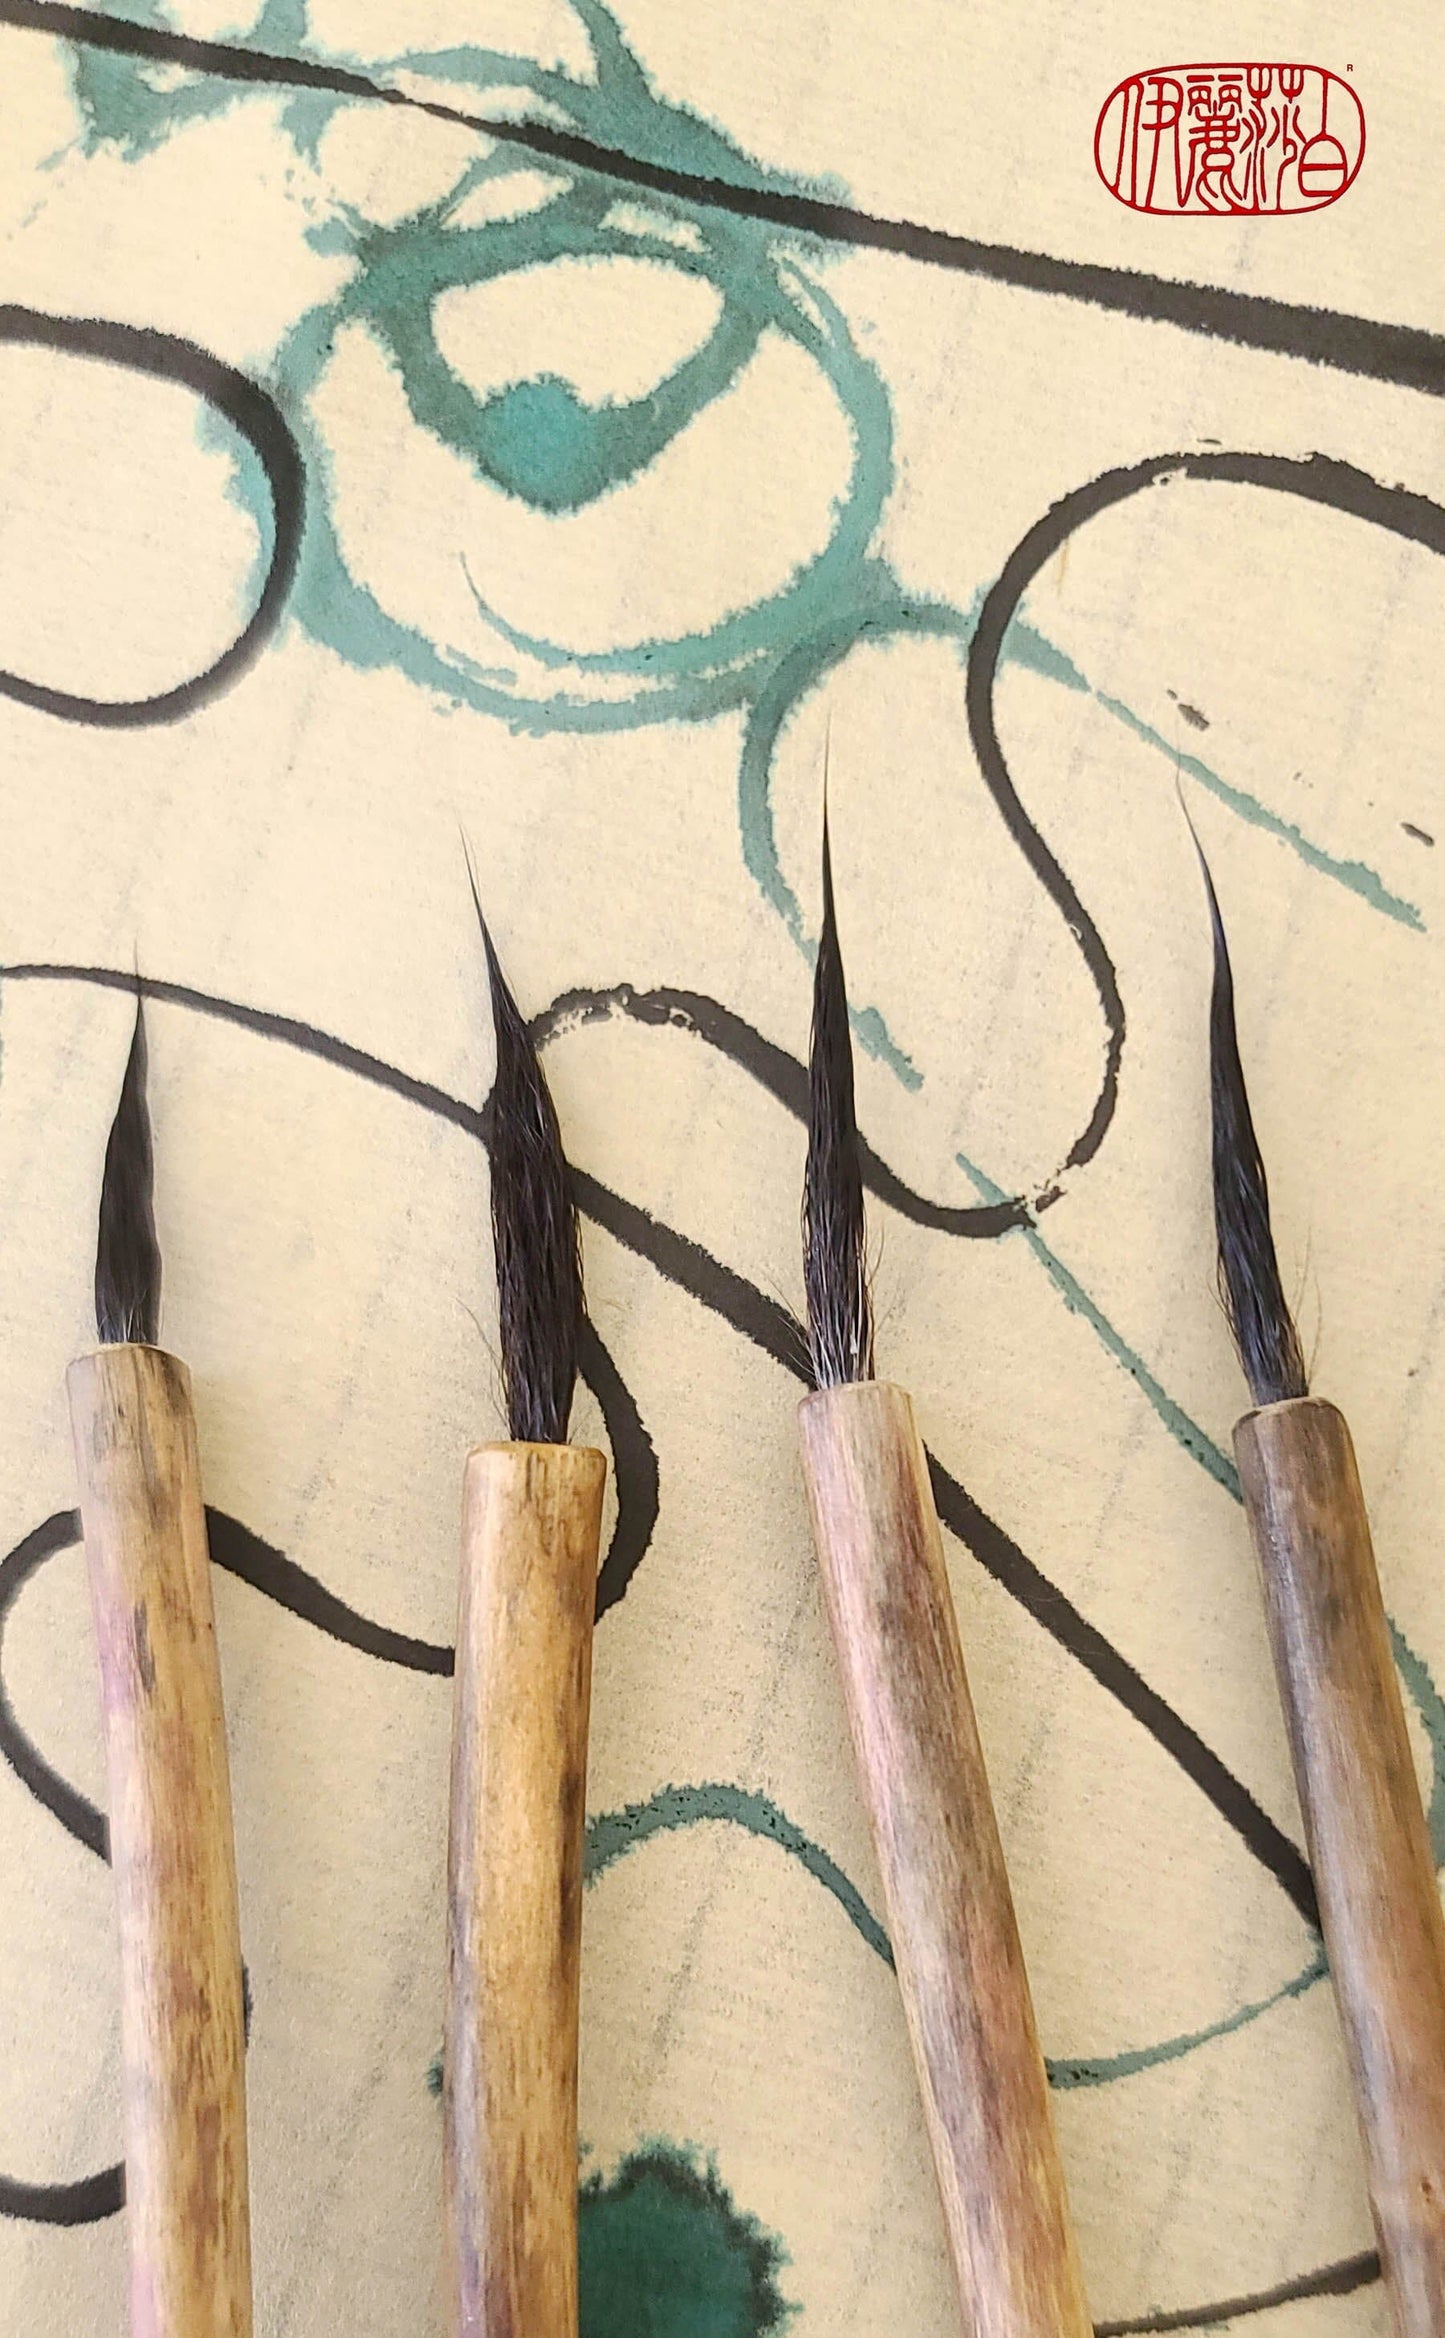 Fine Point Paintbrushes with Driftwood Handles Paintbrush Elizabeth Schowachert Art